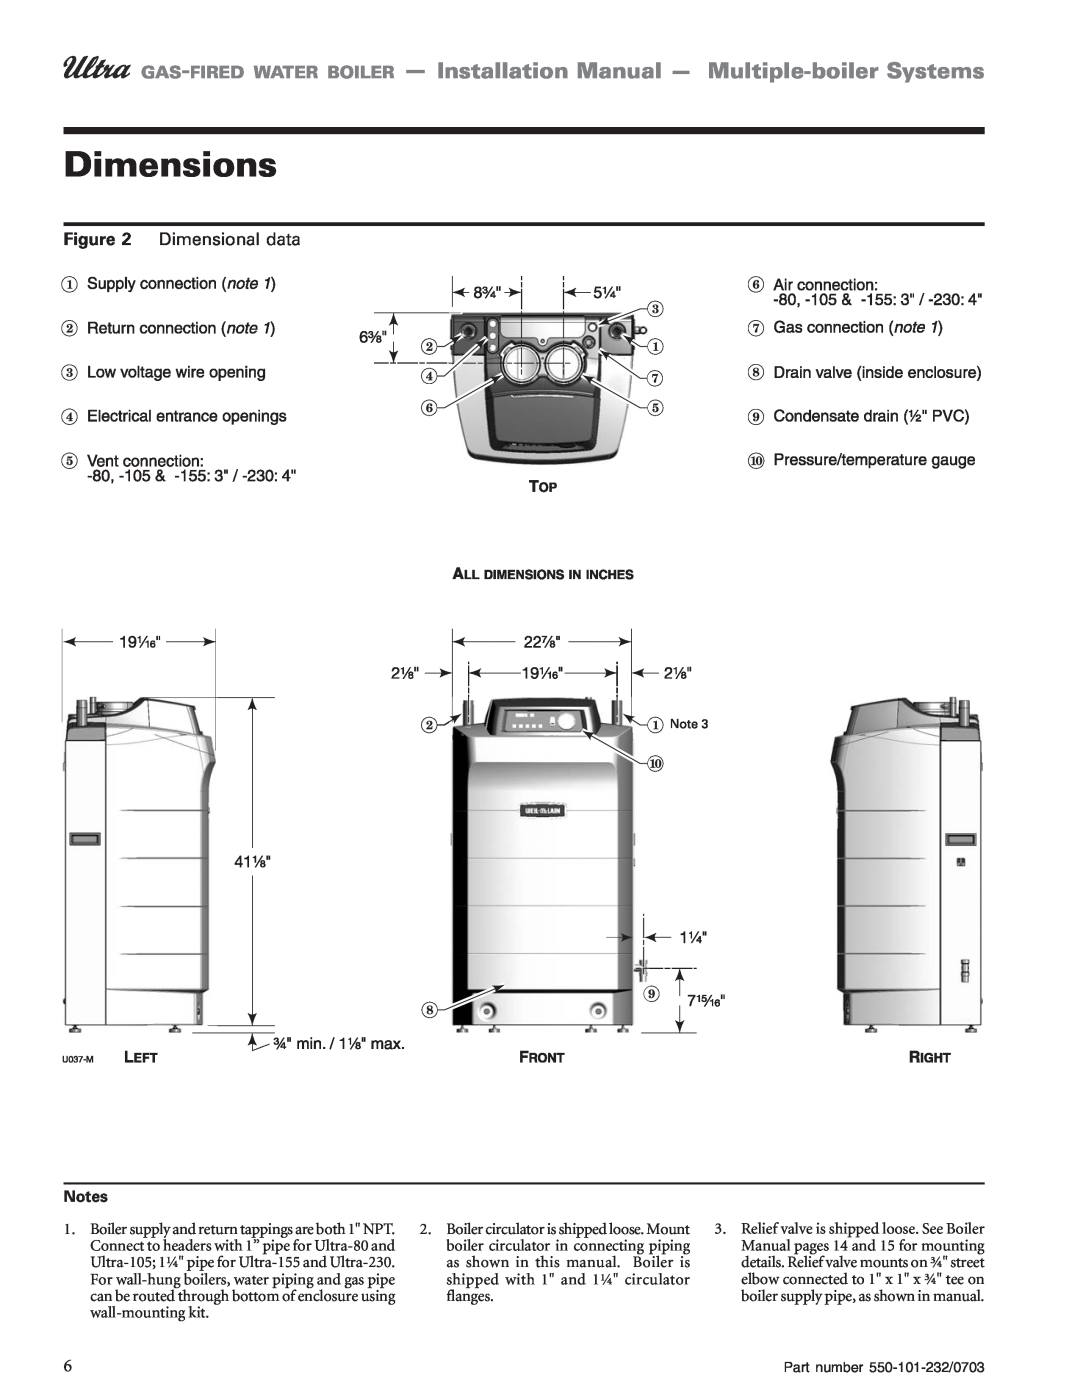 Weil-McLain Boiler installation manual Dimensions, Dimensional data 